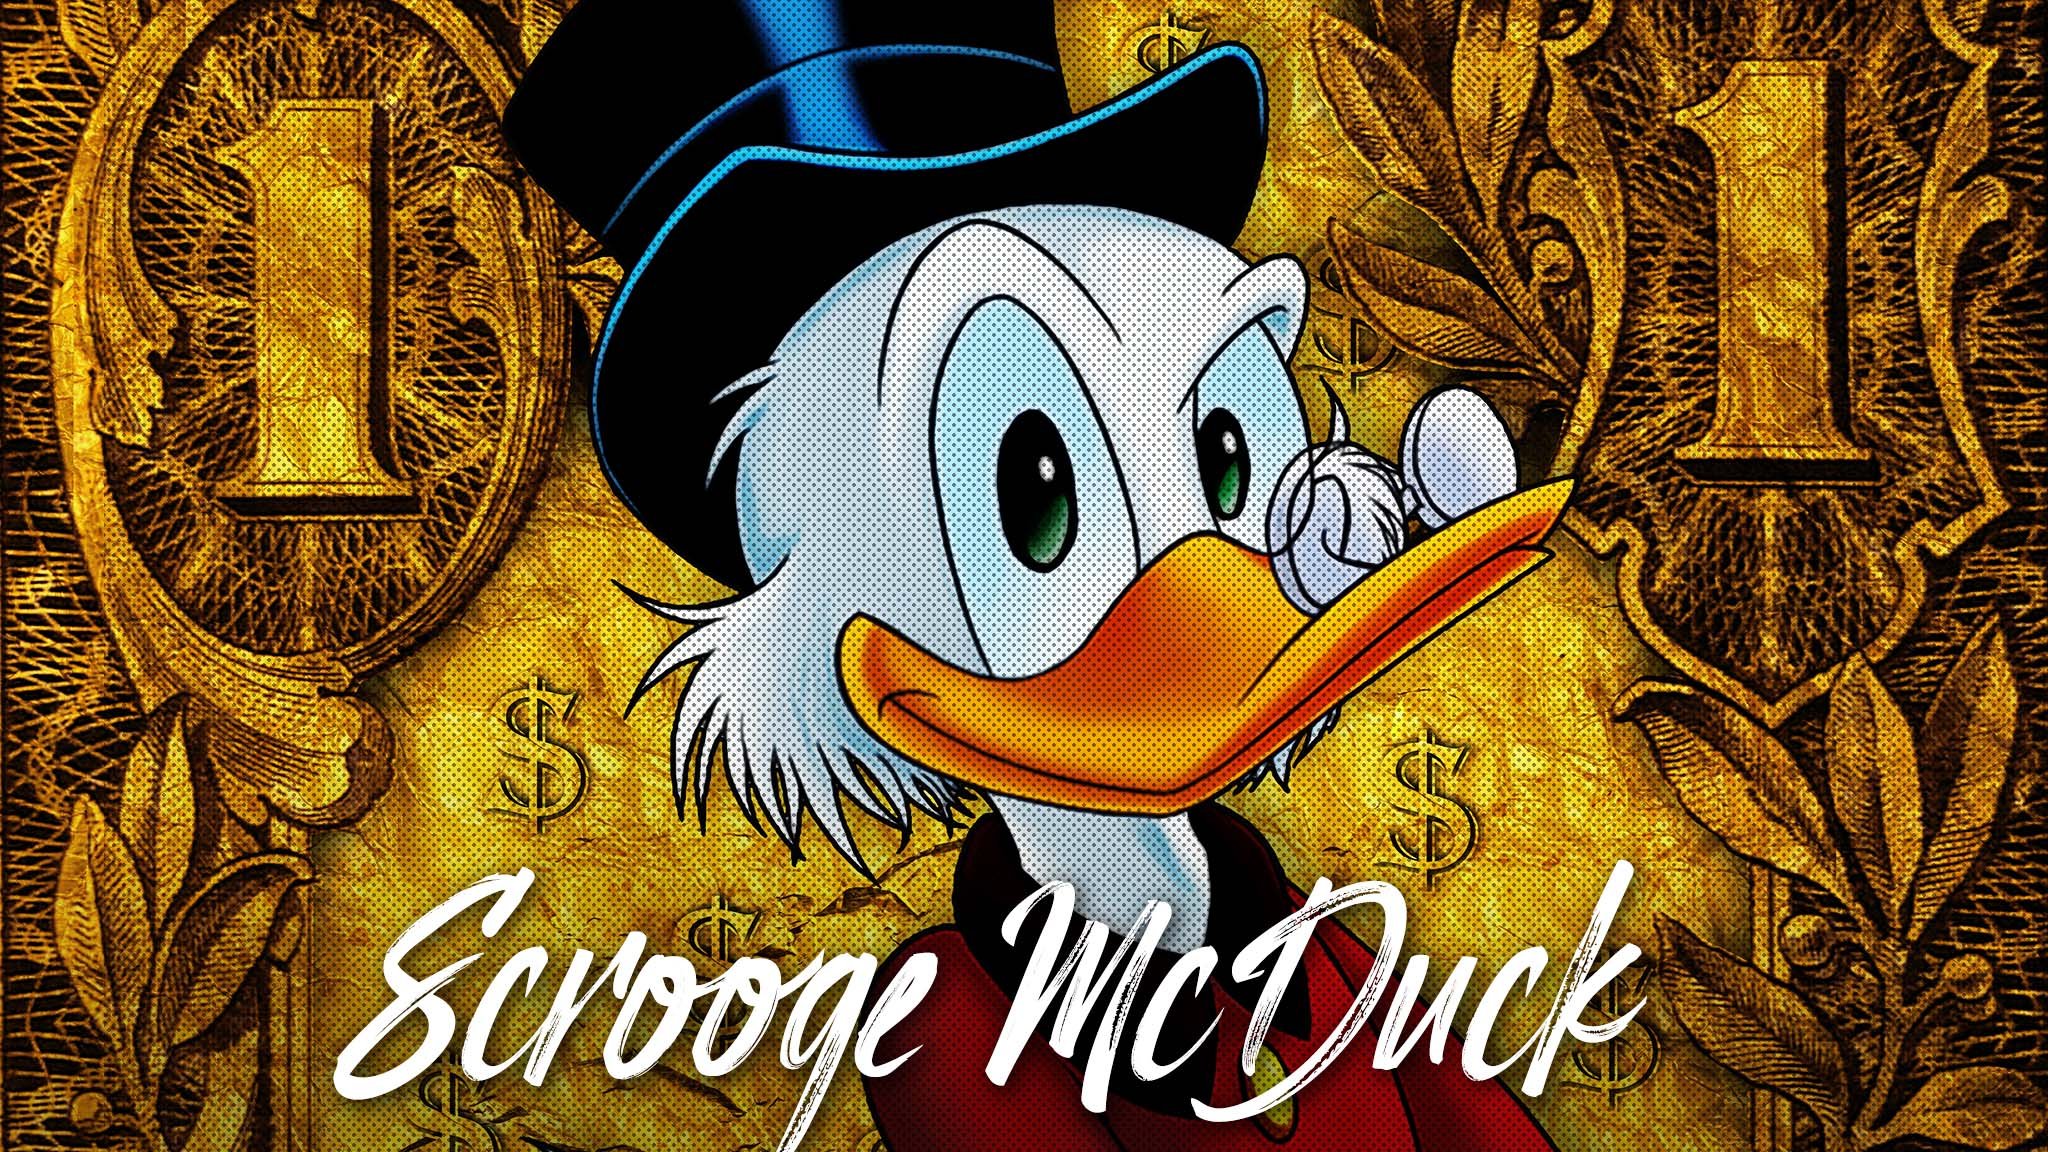 ДЕНЕЖНАЯ КАРТИНА - Скрудж Макдак и доллар | Scrooge McDuck